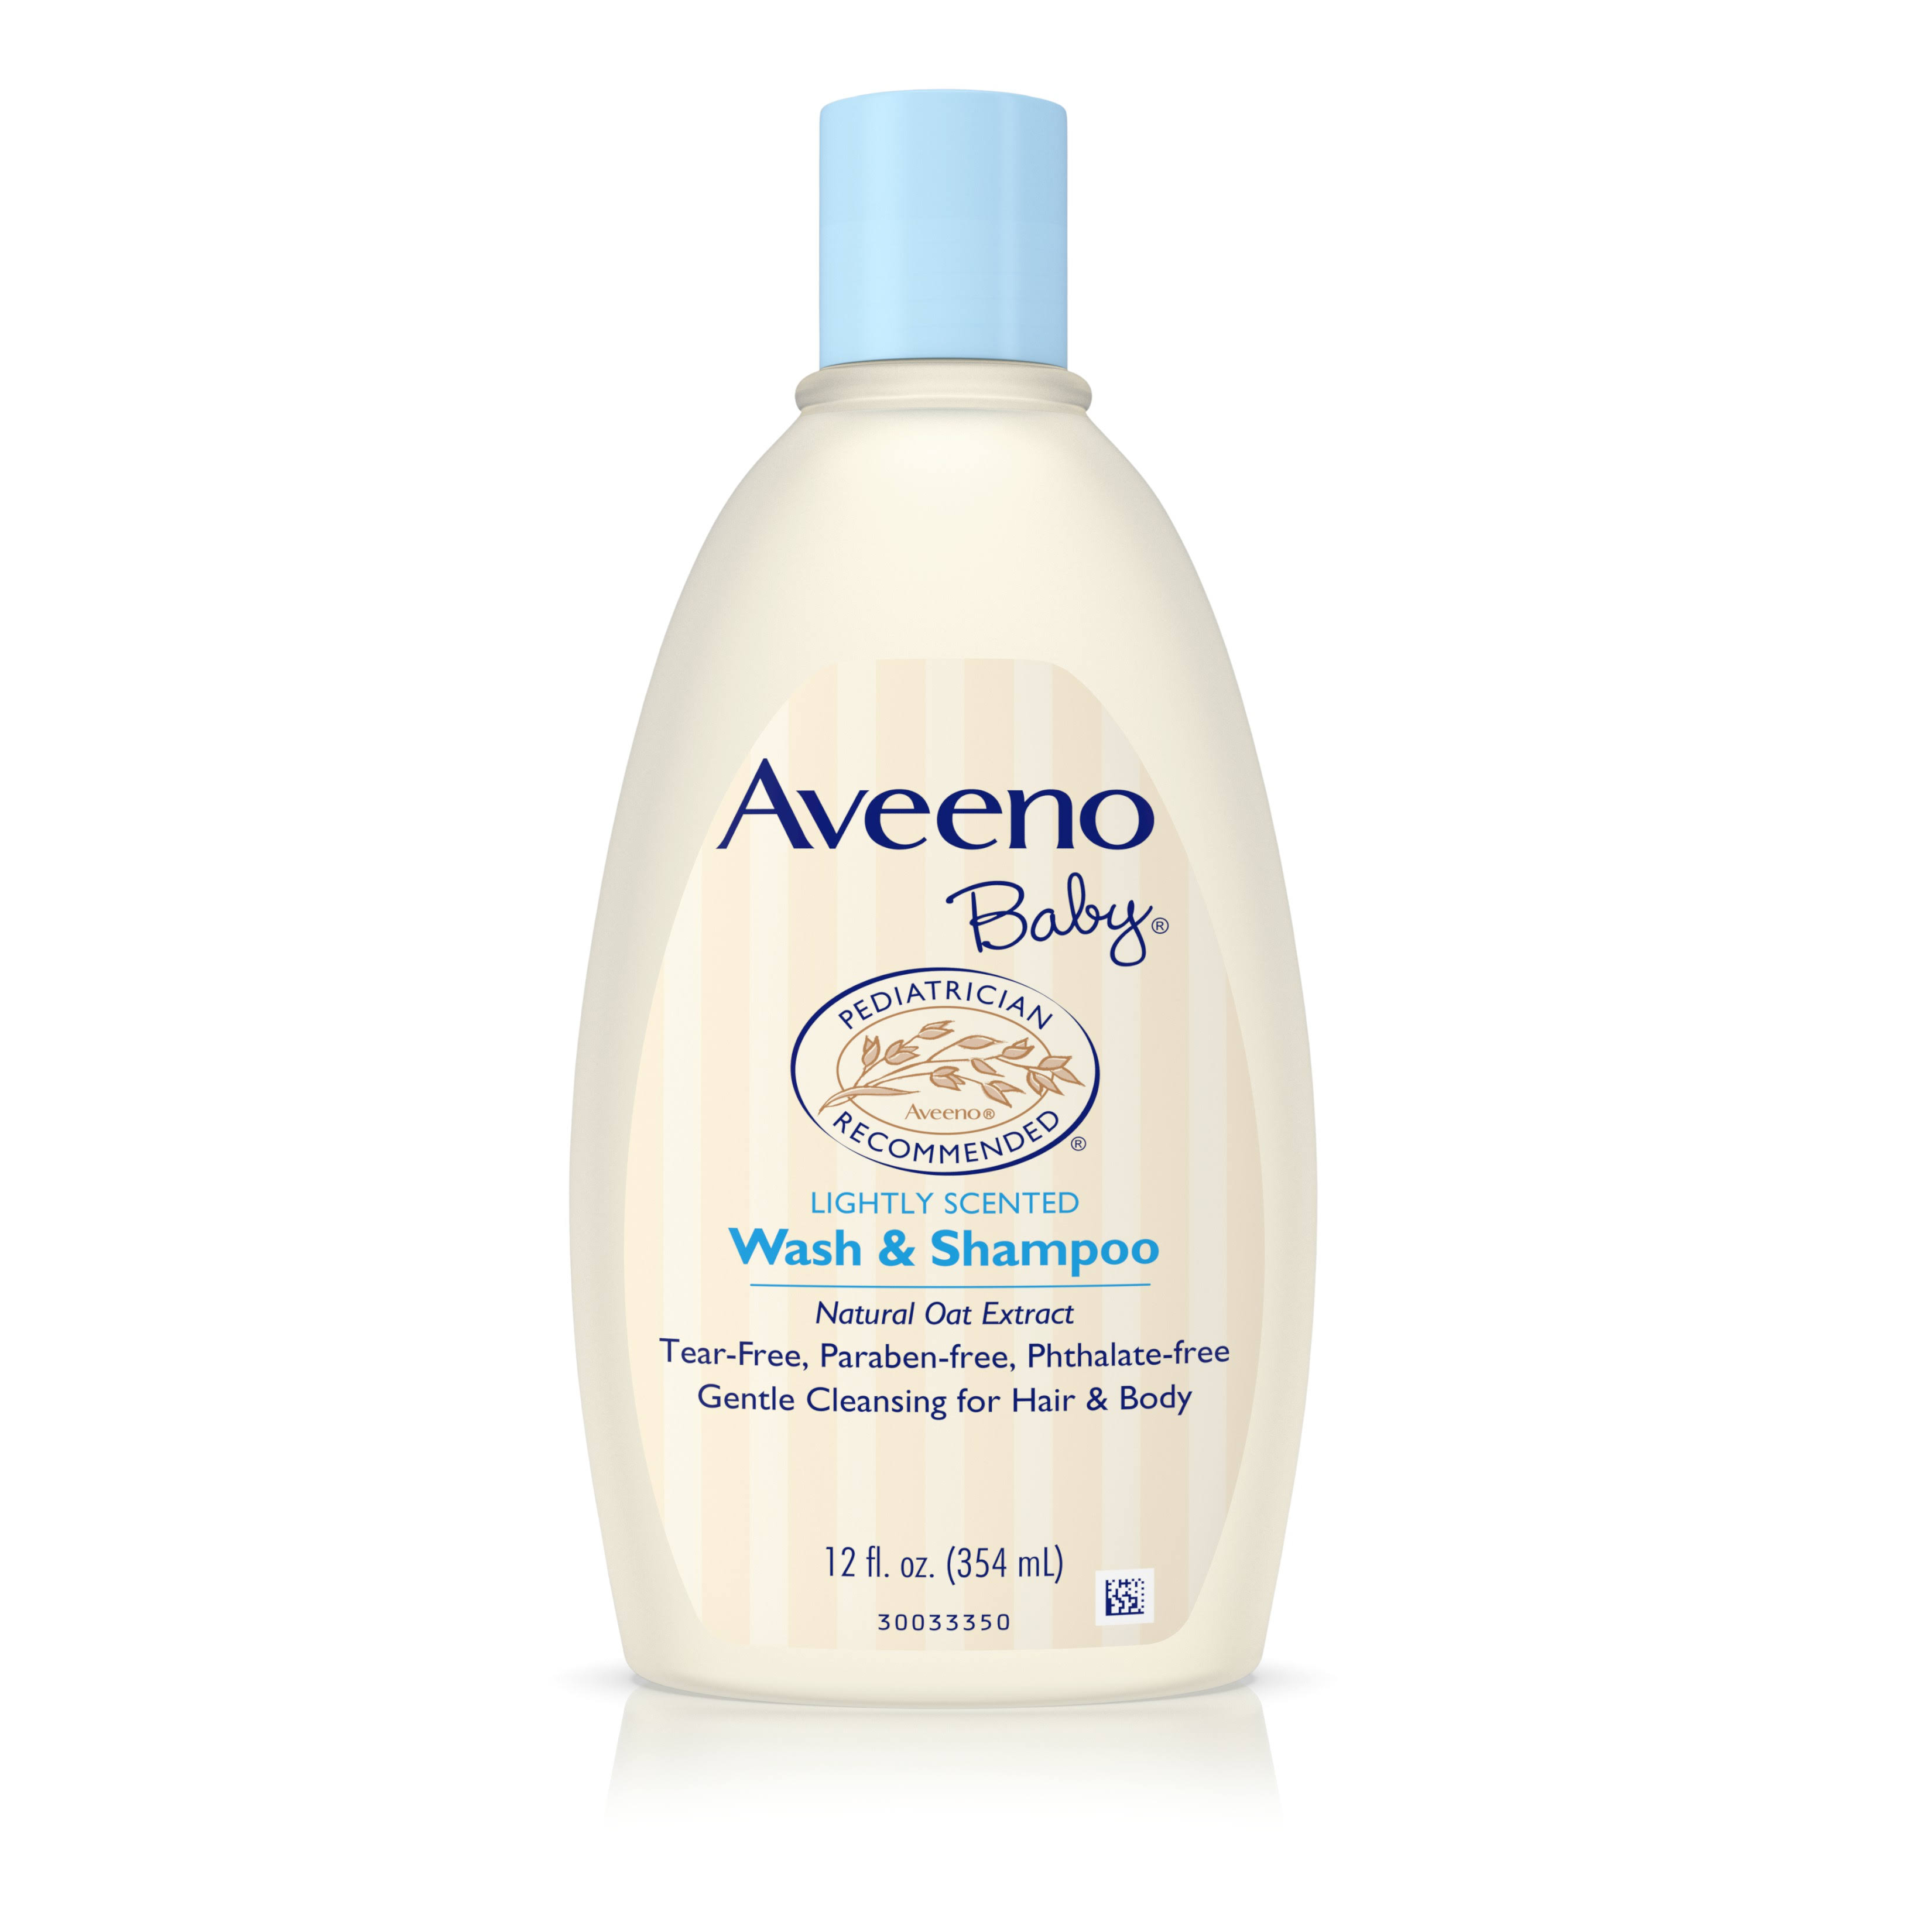 Aveeno Baby Wash and Shampoo - 12oz, Lightly Scented